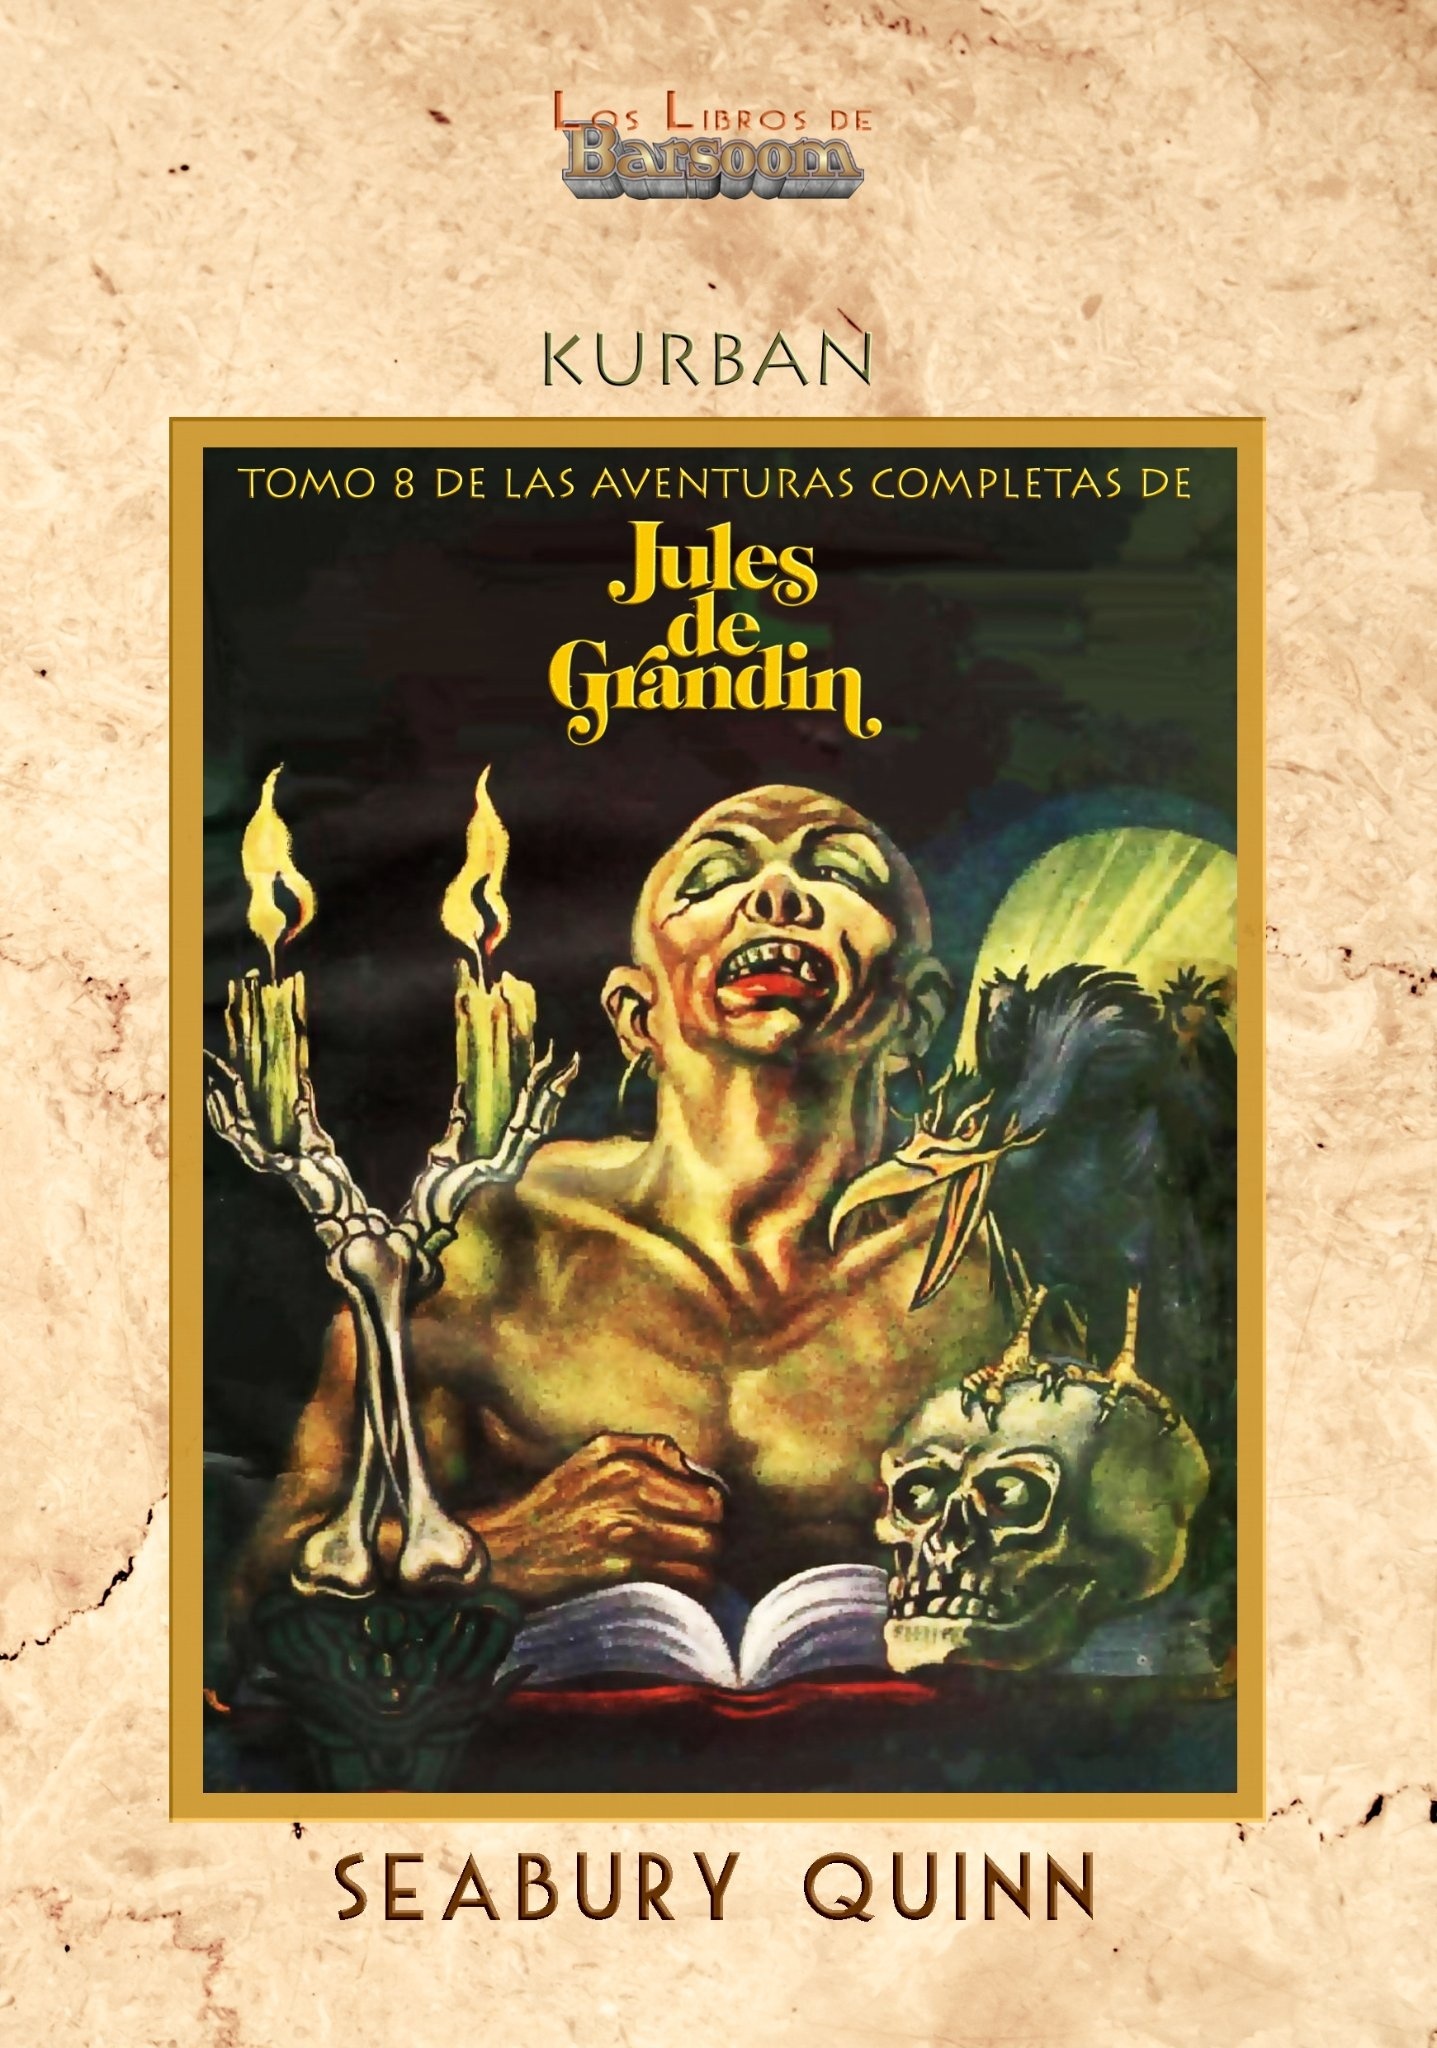 Kurban "Aventuras completas de Jules de Grandin VIII"